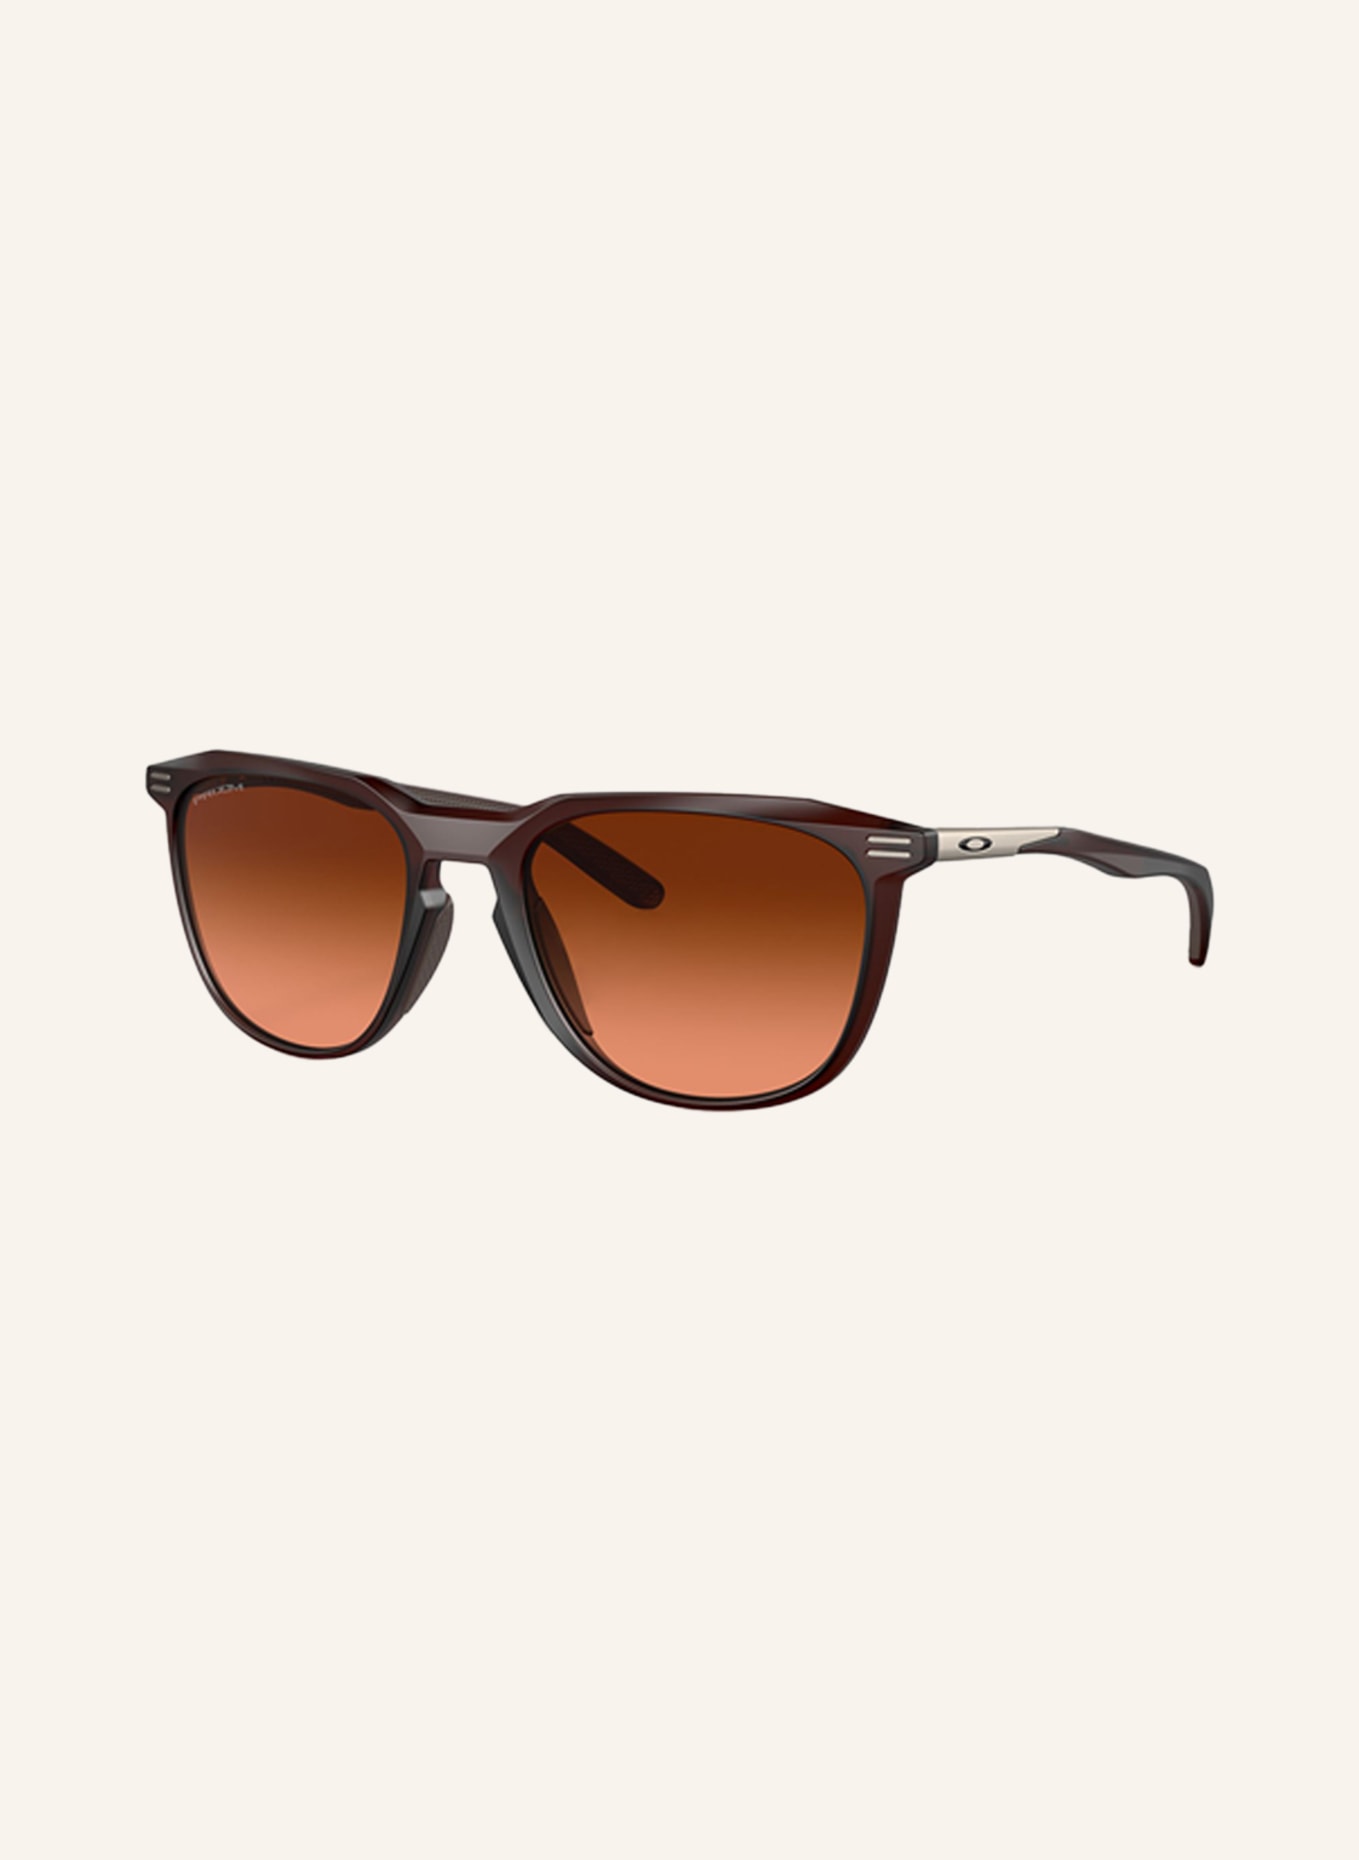 Buy Oakley Dispute Rectangular Sunglasses Crystal Raspberry/Purple Gradient  Polarized at Amazon.in